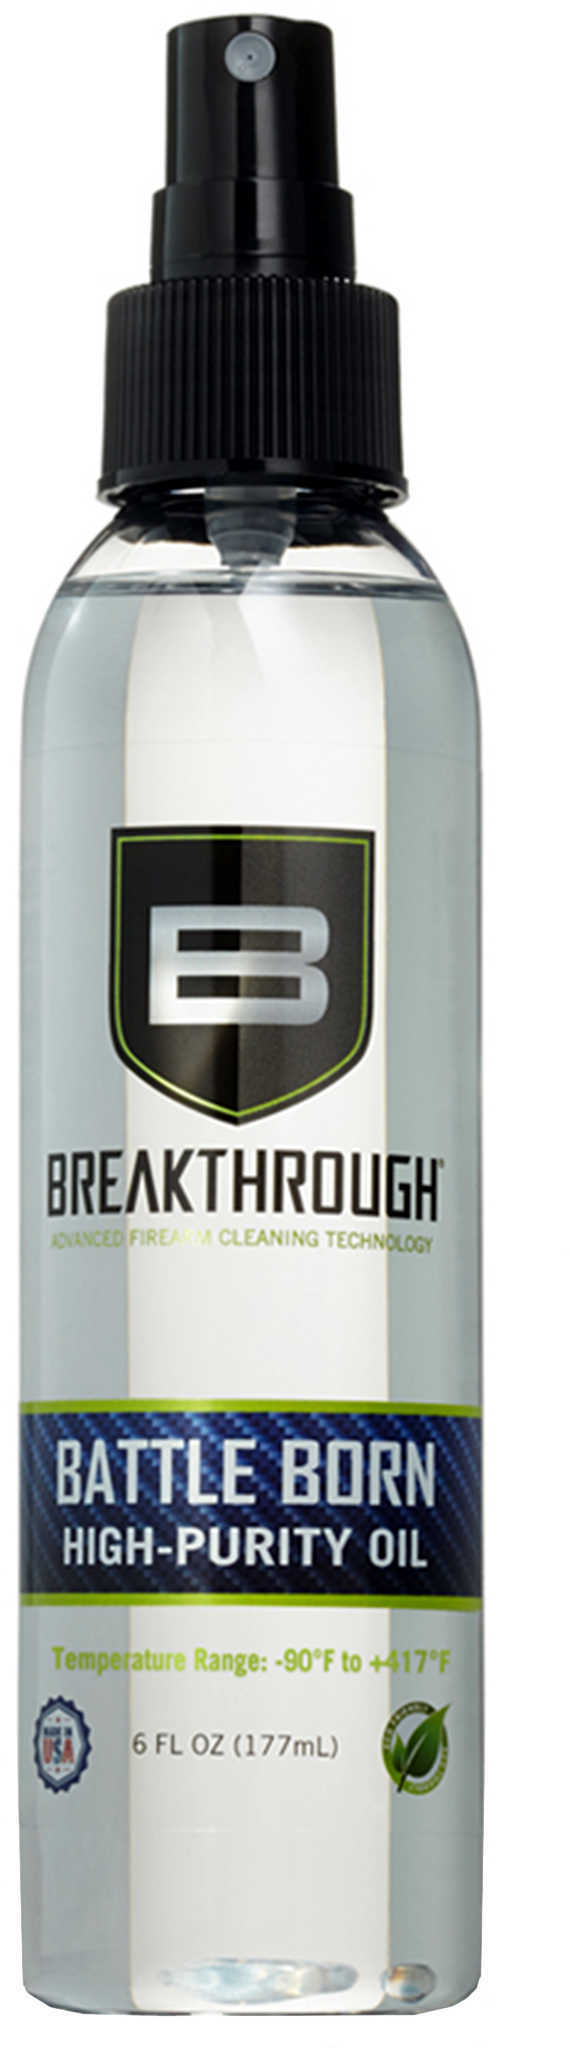 Breakthrough Clean Technology Bb High-purity Oil 6 Oz Spray Bottle